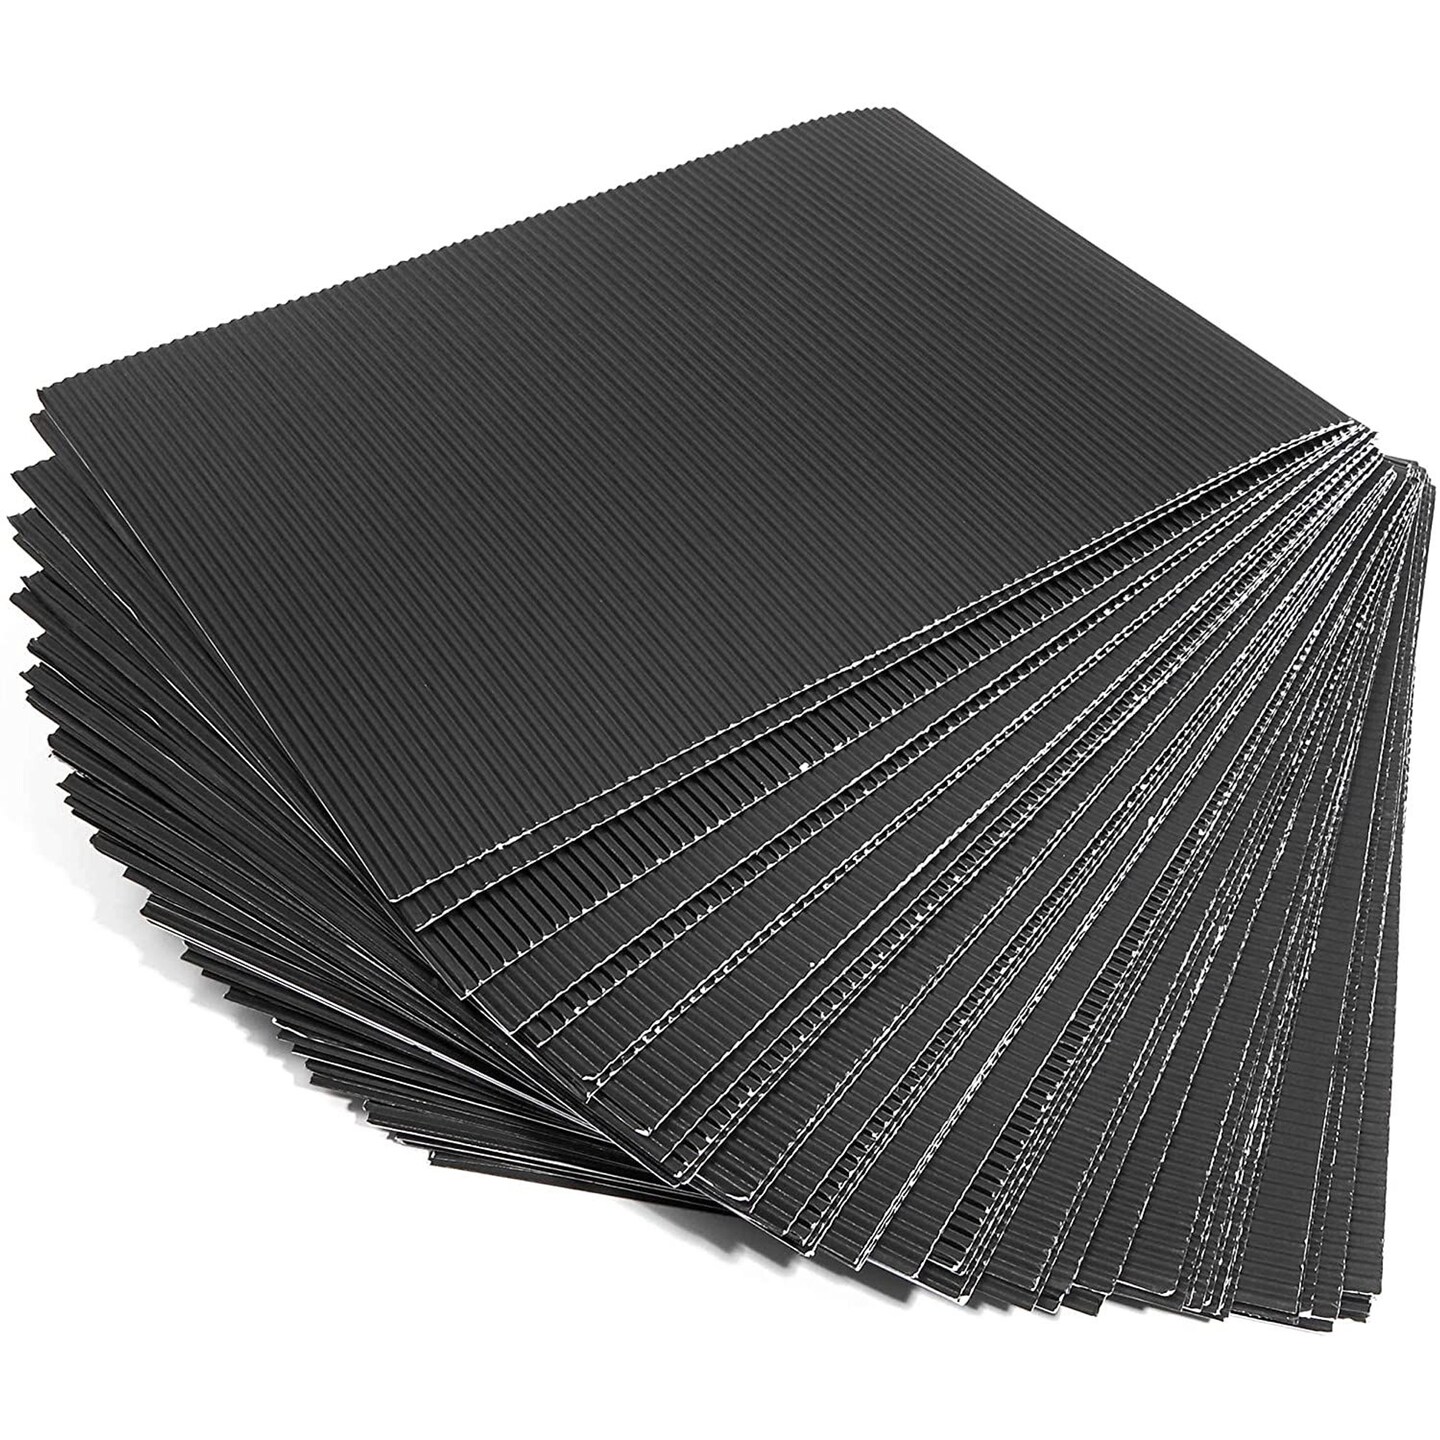 Corrugated Cardboard Paper Sheets (8.5 x 11 in, Black, 48-Pack)